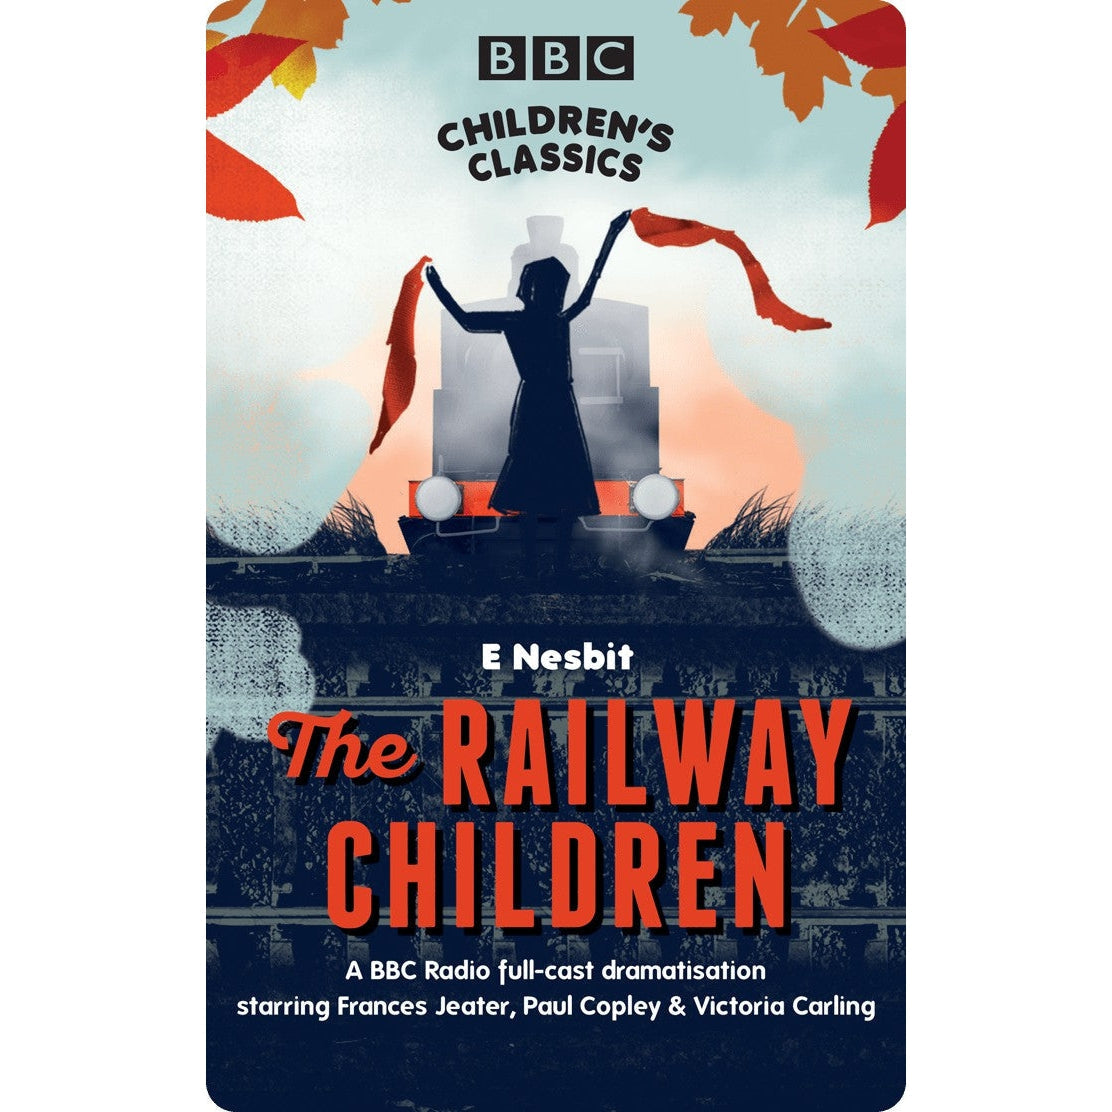 Yoto Card - The Railway Children (BBC Children’s Classics) - Child Friendly Audio Story Card for the Yoto Player